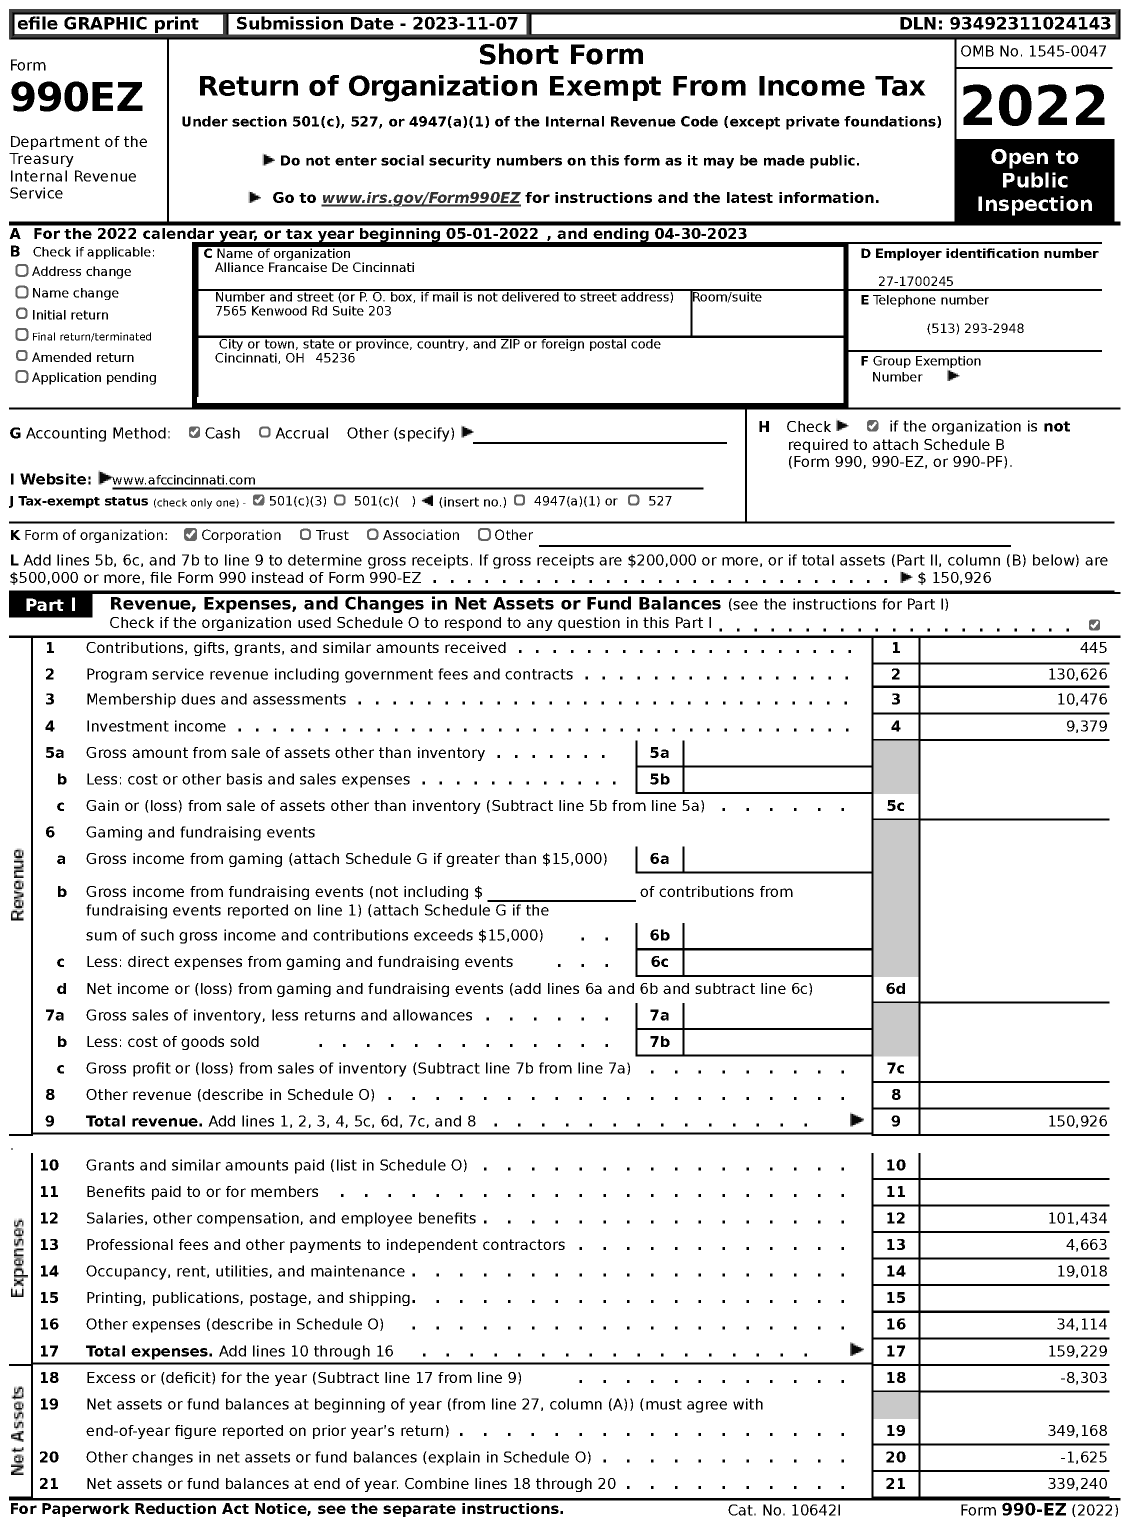 Image of first page of 2022 Form 990EZ for Alliance Francaise De Cincinnati